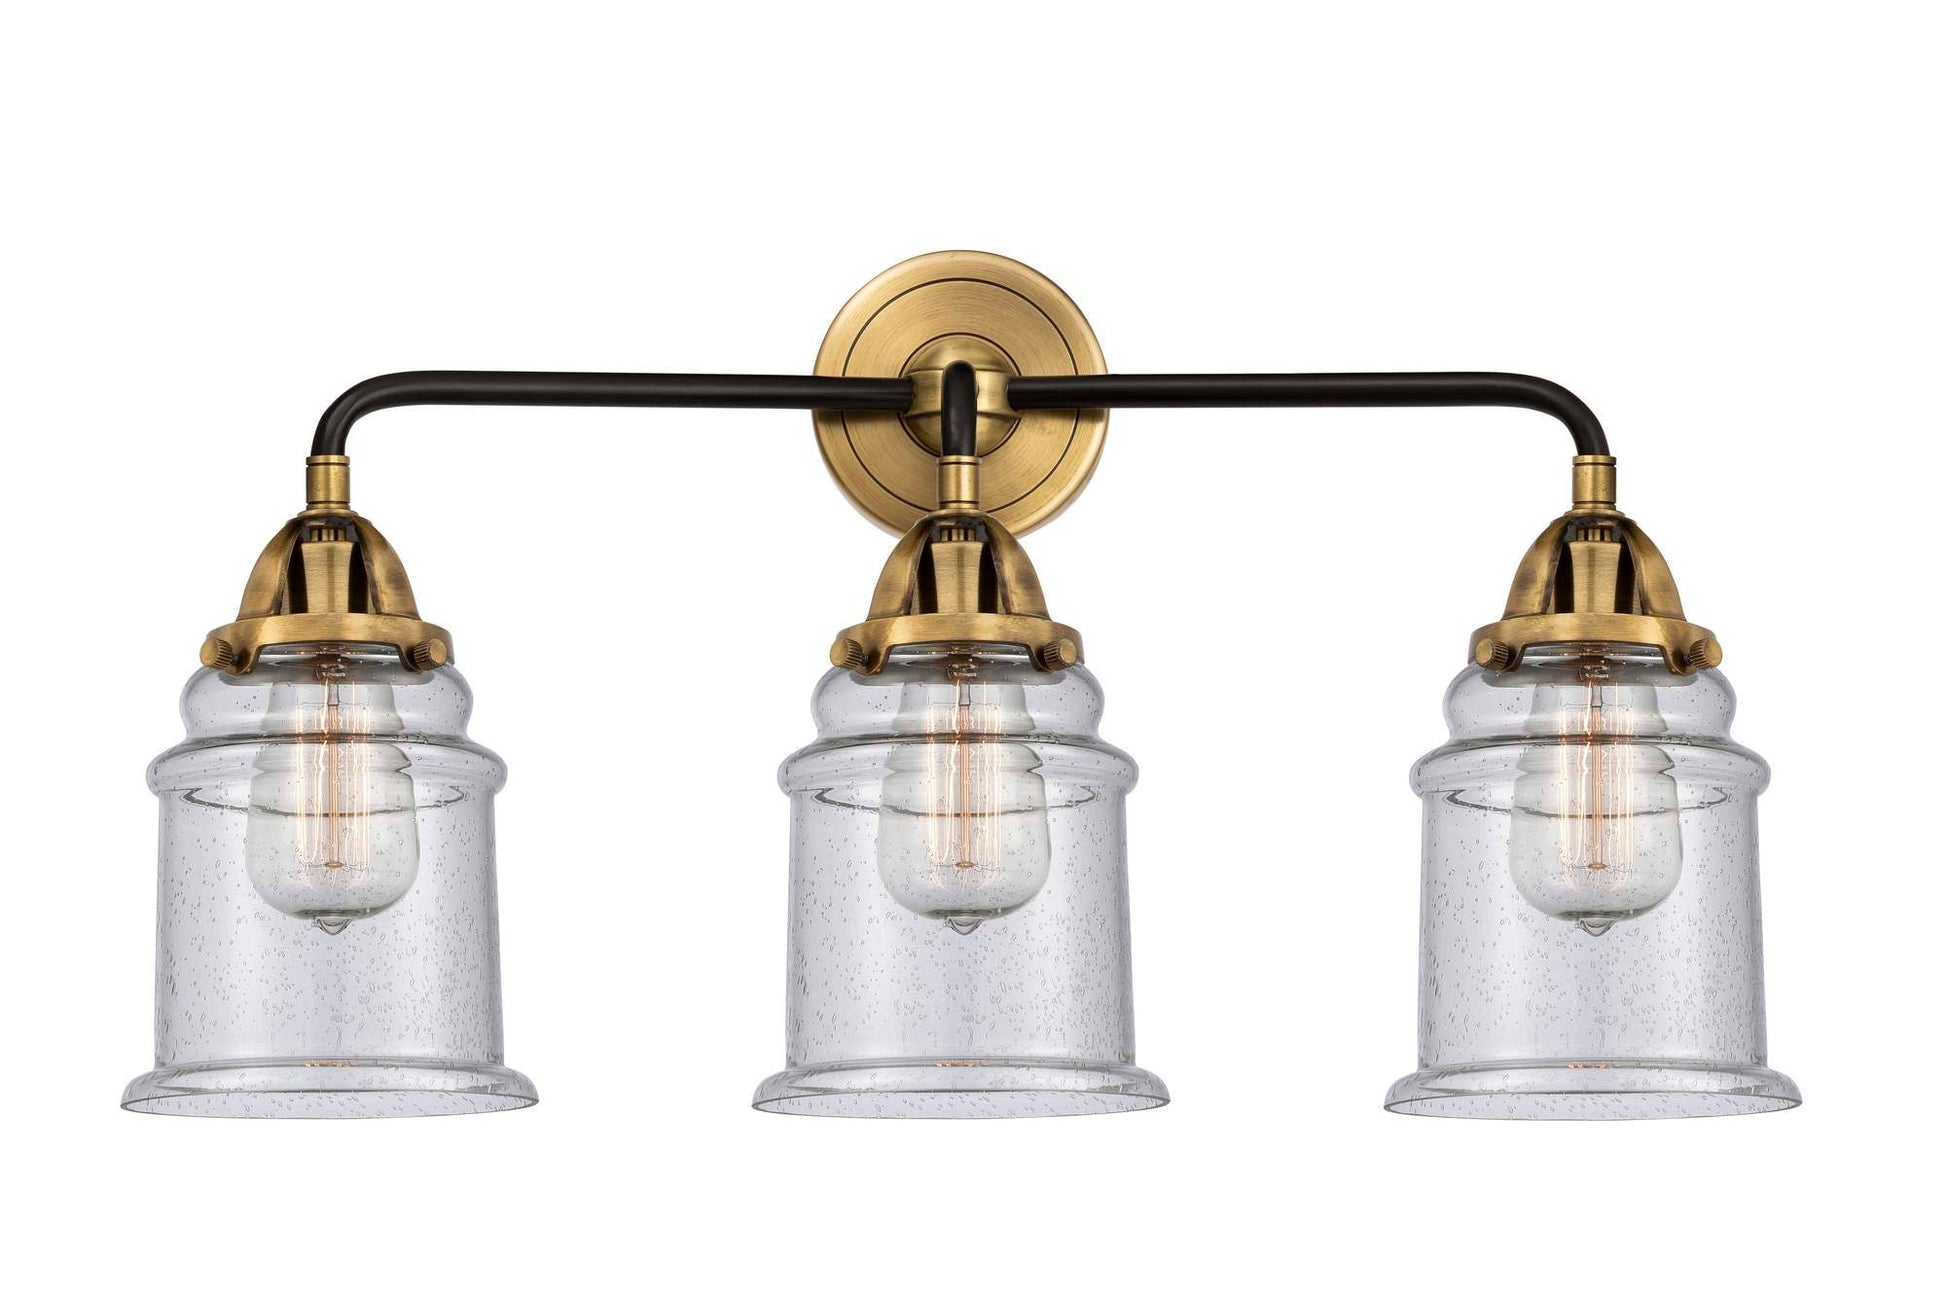 3-Light 24" Black Antique Brass Bath Vanity Light - Seedy Canton Glass - Choice of Finish And Incandesent Or LED Bulbs